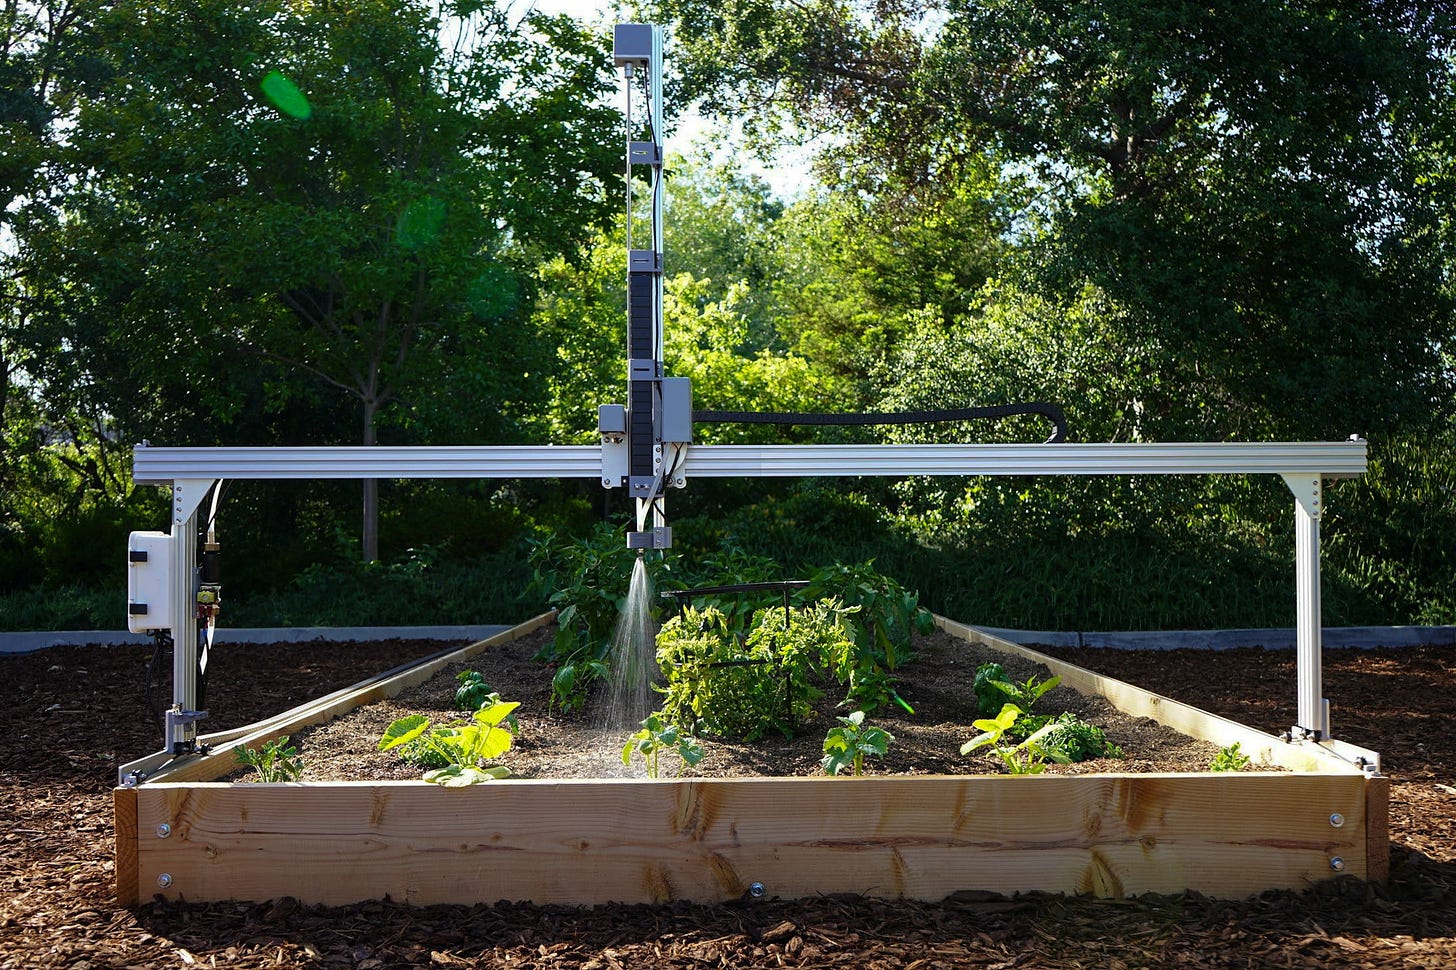 FarmBot DIY Gardening Robots Allow You to Harvest More Produce ...